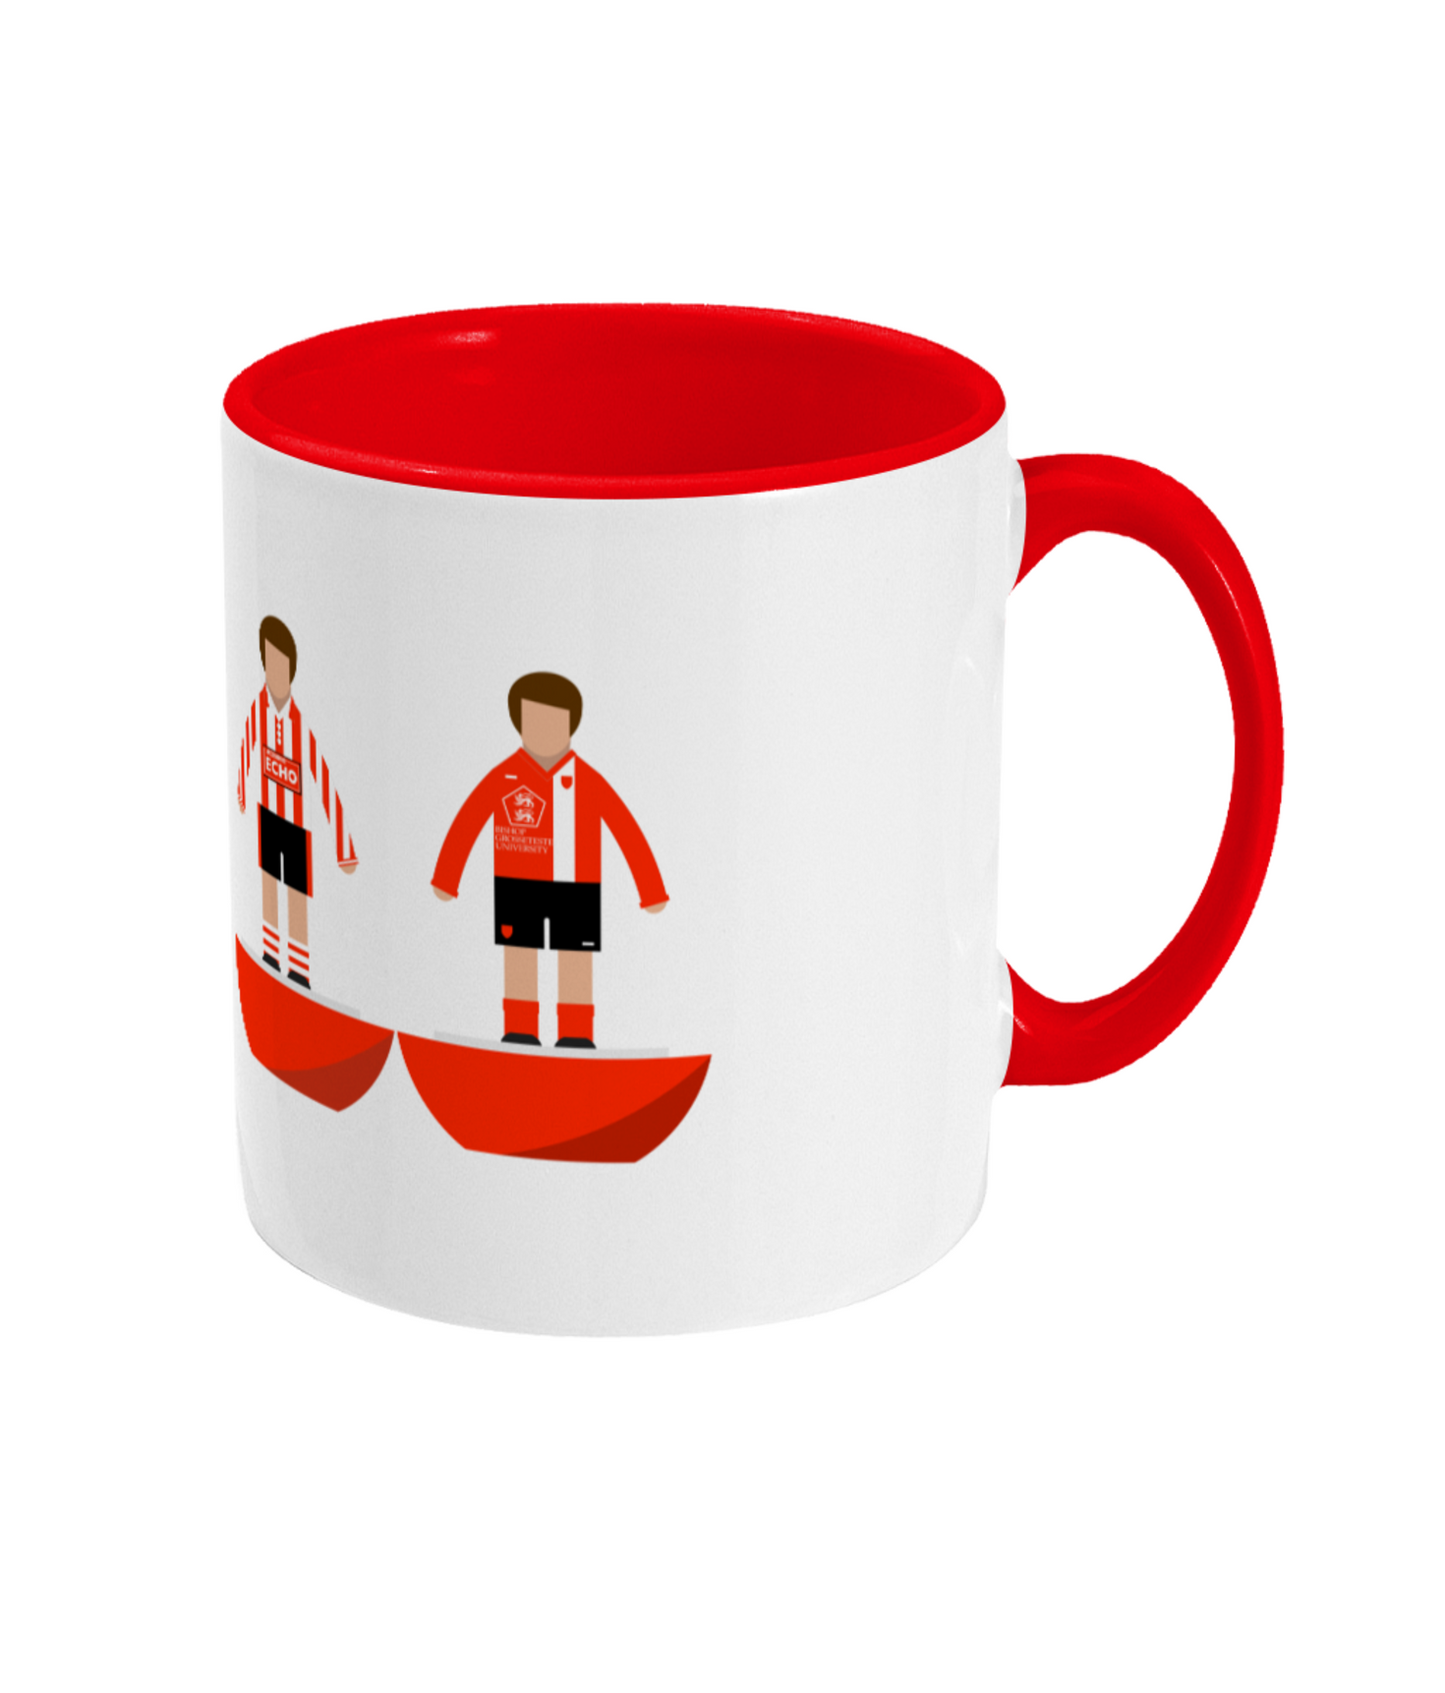 Football Kits 'Lincoln combined' Mug